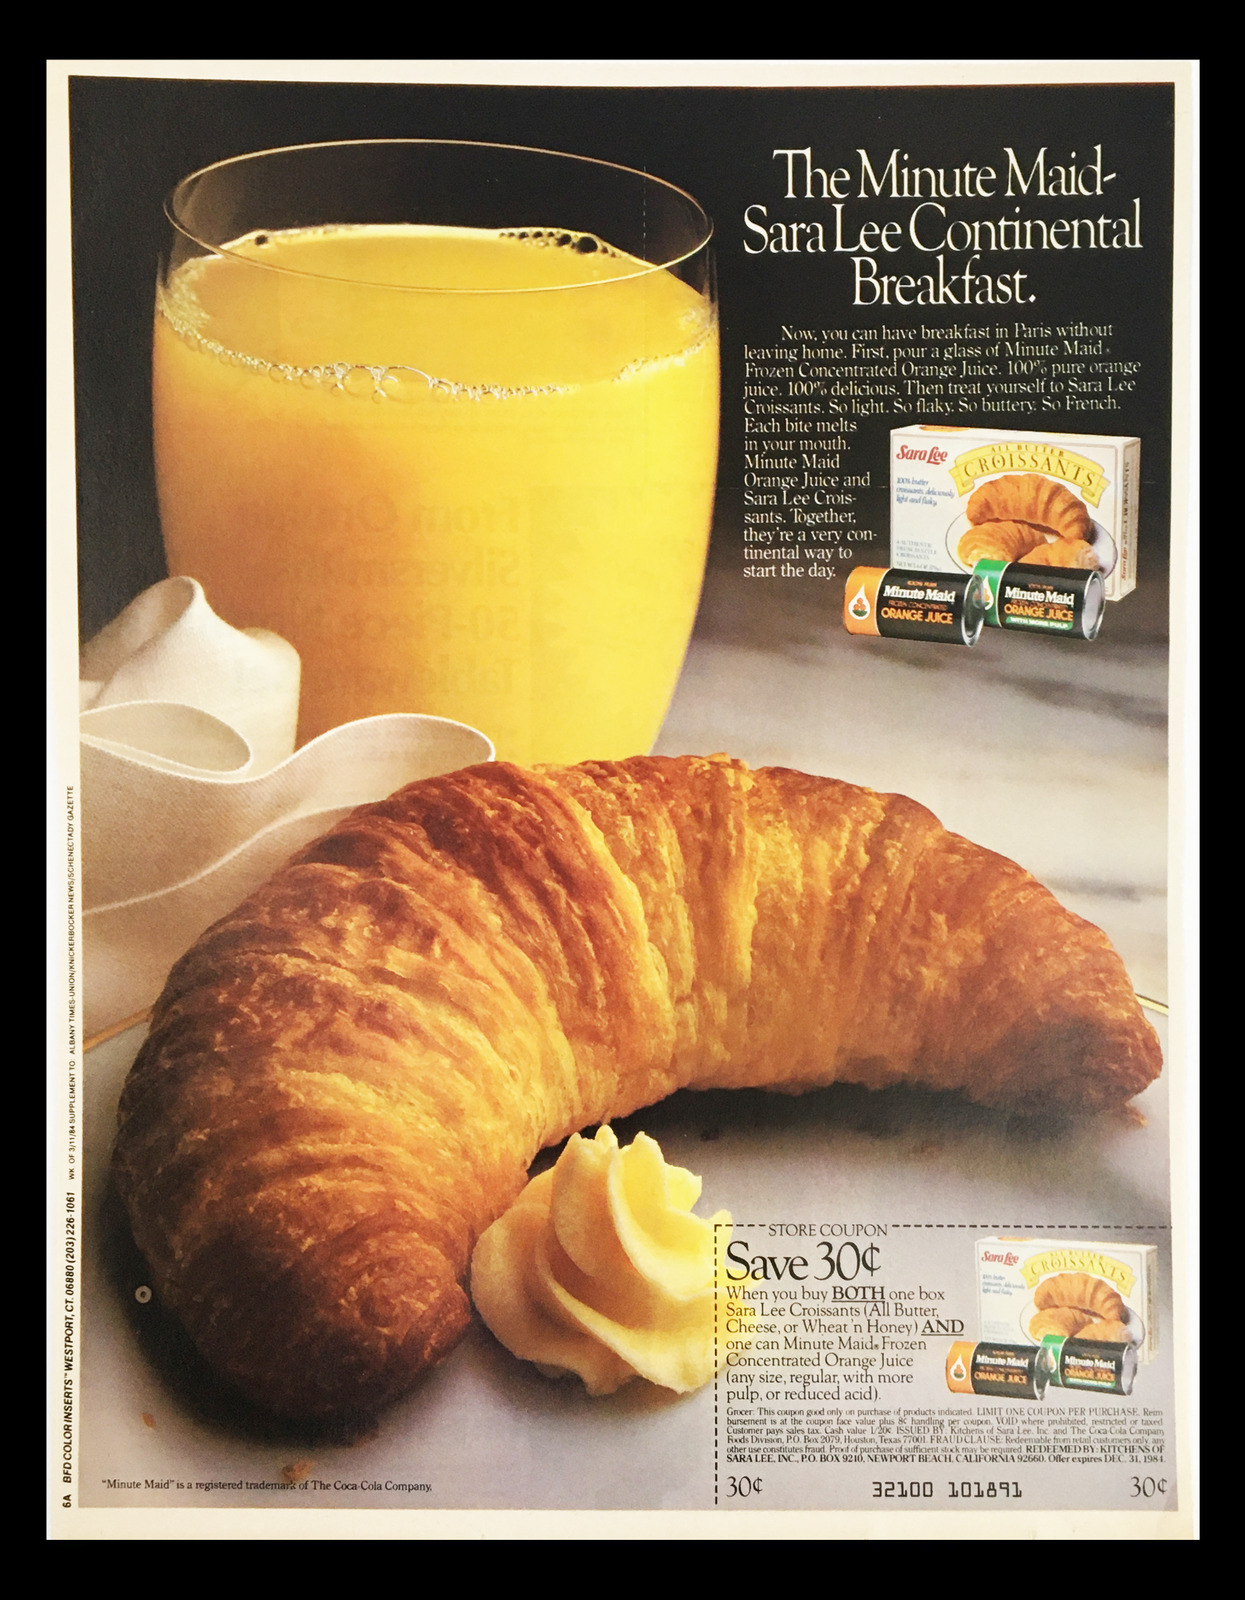 1984 Minute-Maid Sara Lee Continental Breakfast Circular Coupon Advertisement